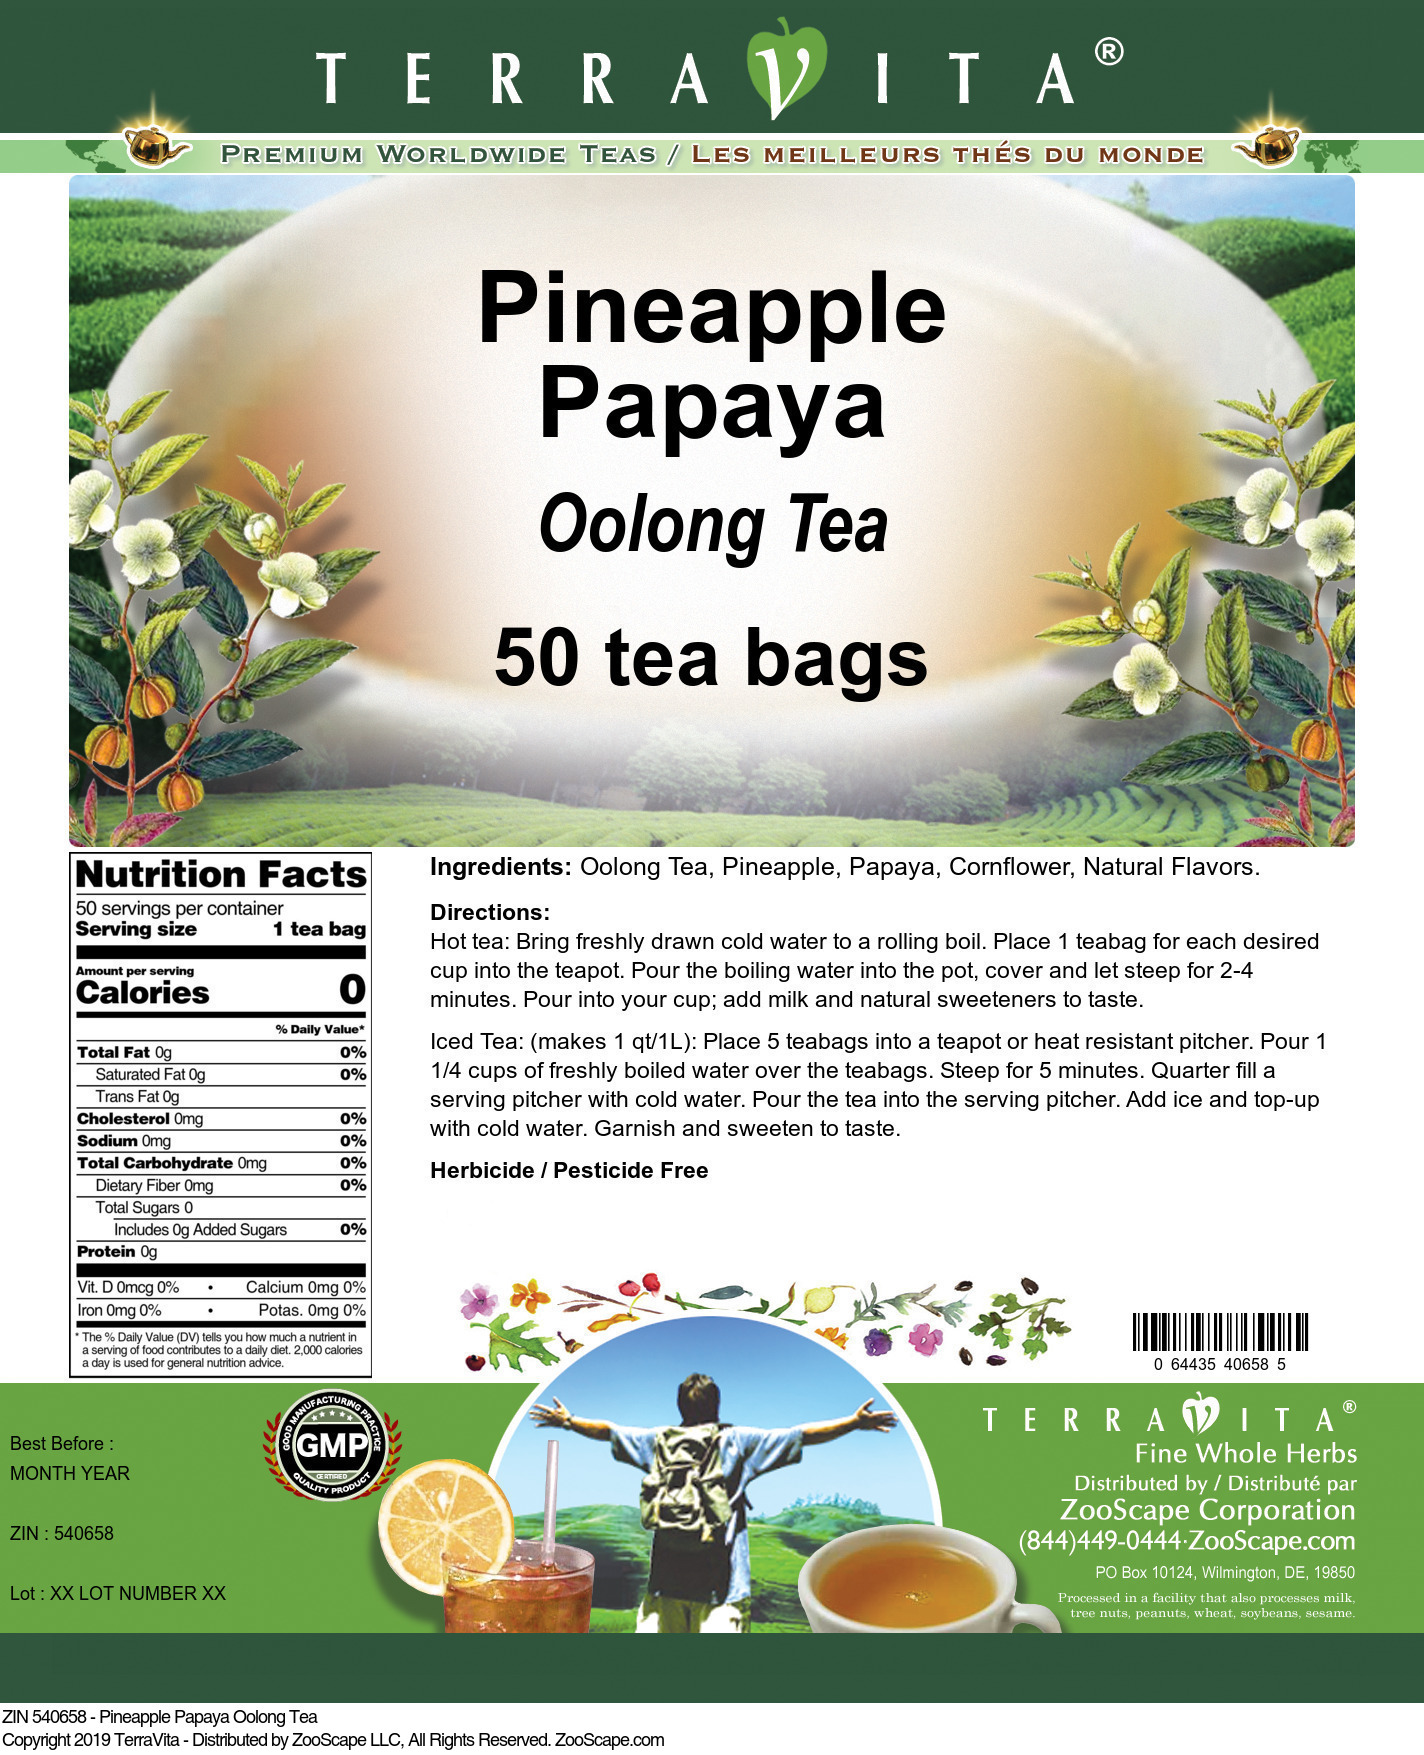 Pineapple Papaya Oolong Tea - Label